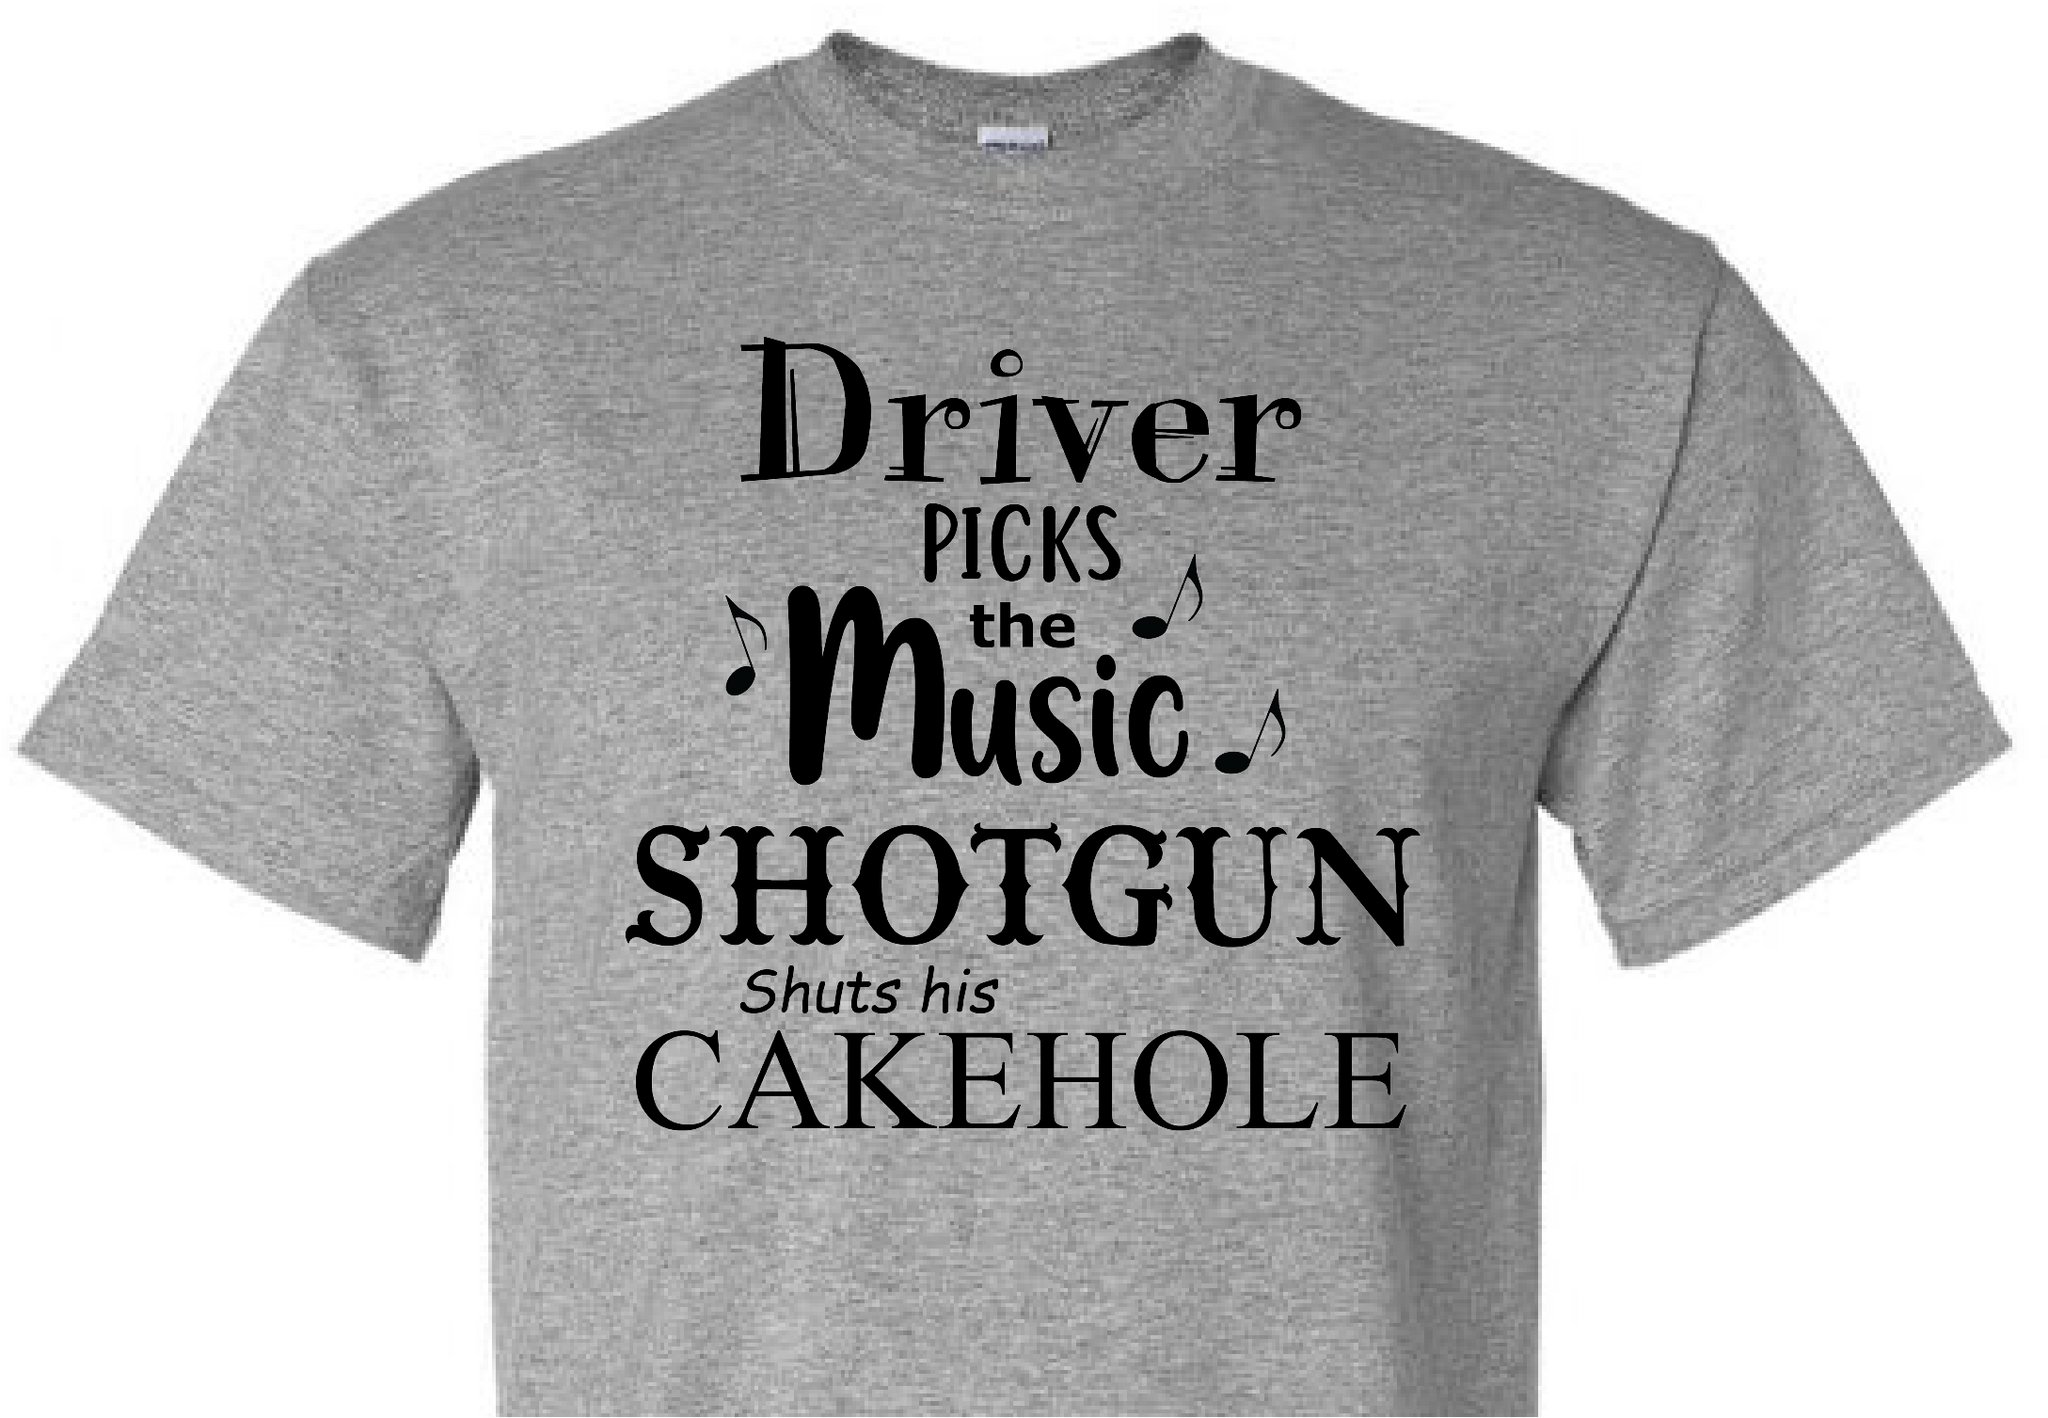 *Driver Picks the Music, Shotgun shuts his Cakehole*